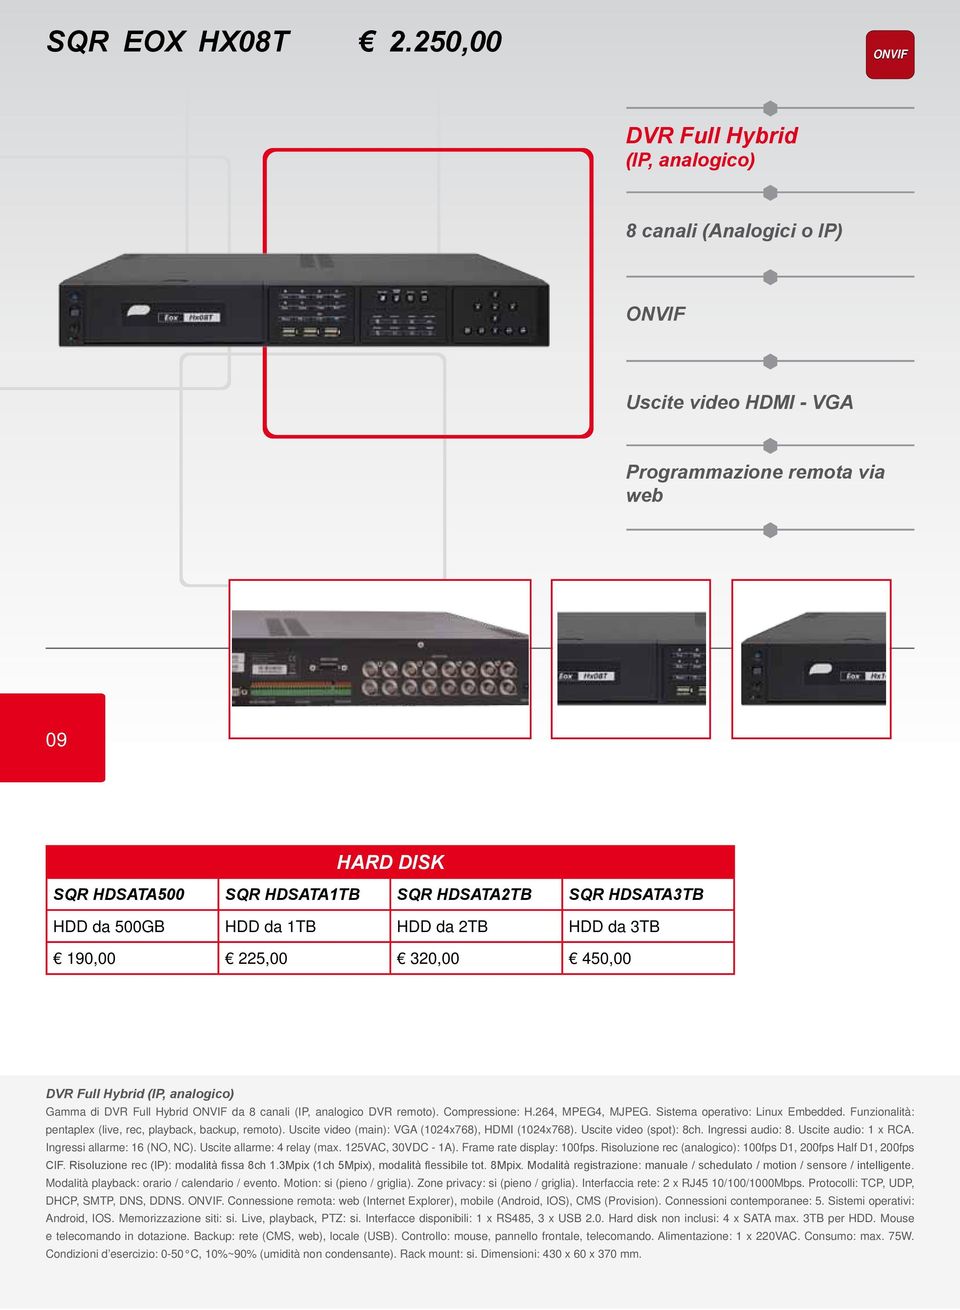 HDD da 500GB HDD da 1TB HDD da 2TB HDD da 3TB 190,00 225,00 320,00 450,00 DVR Full Hybrid (IP, analogico) Gamma di DVR Full Hybrid ONVIF da 8 canali (IP, analogico DVR remoto). Compressione: H.